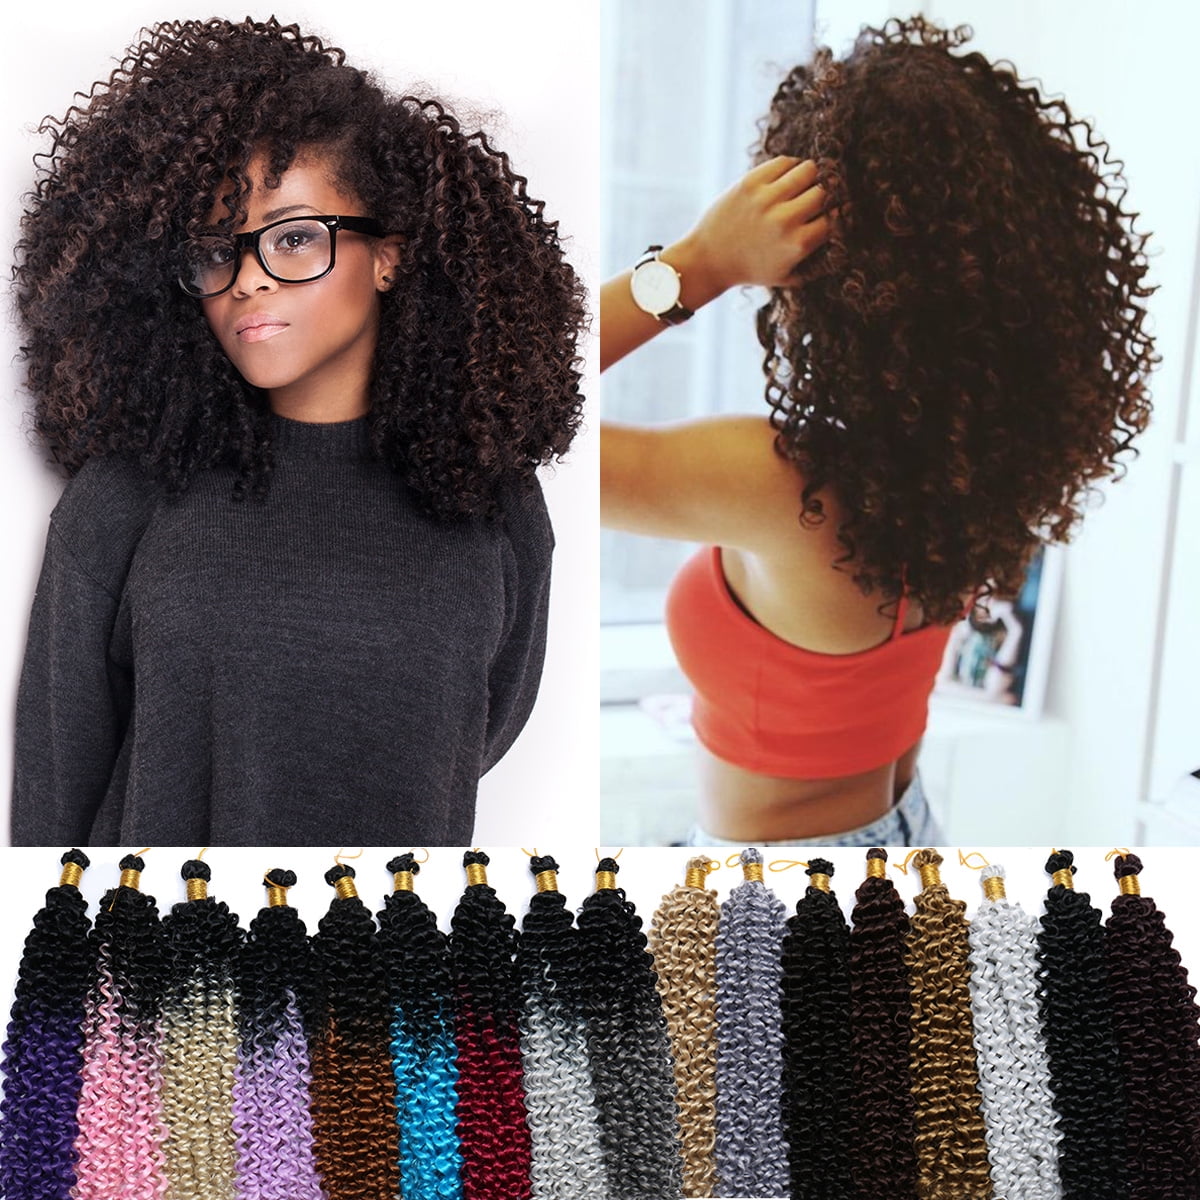 New Kinky crochet hairstyle. #easyhairstyletutorial #crochet #crocheth, crochet hair hairstyles